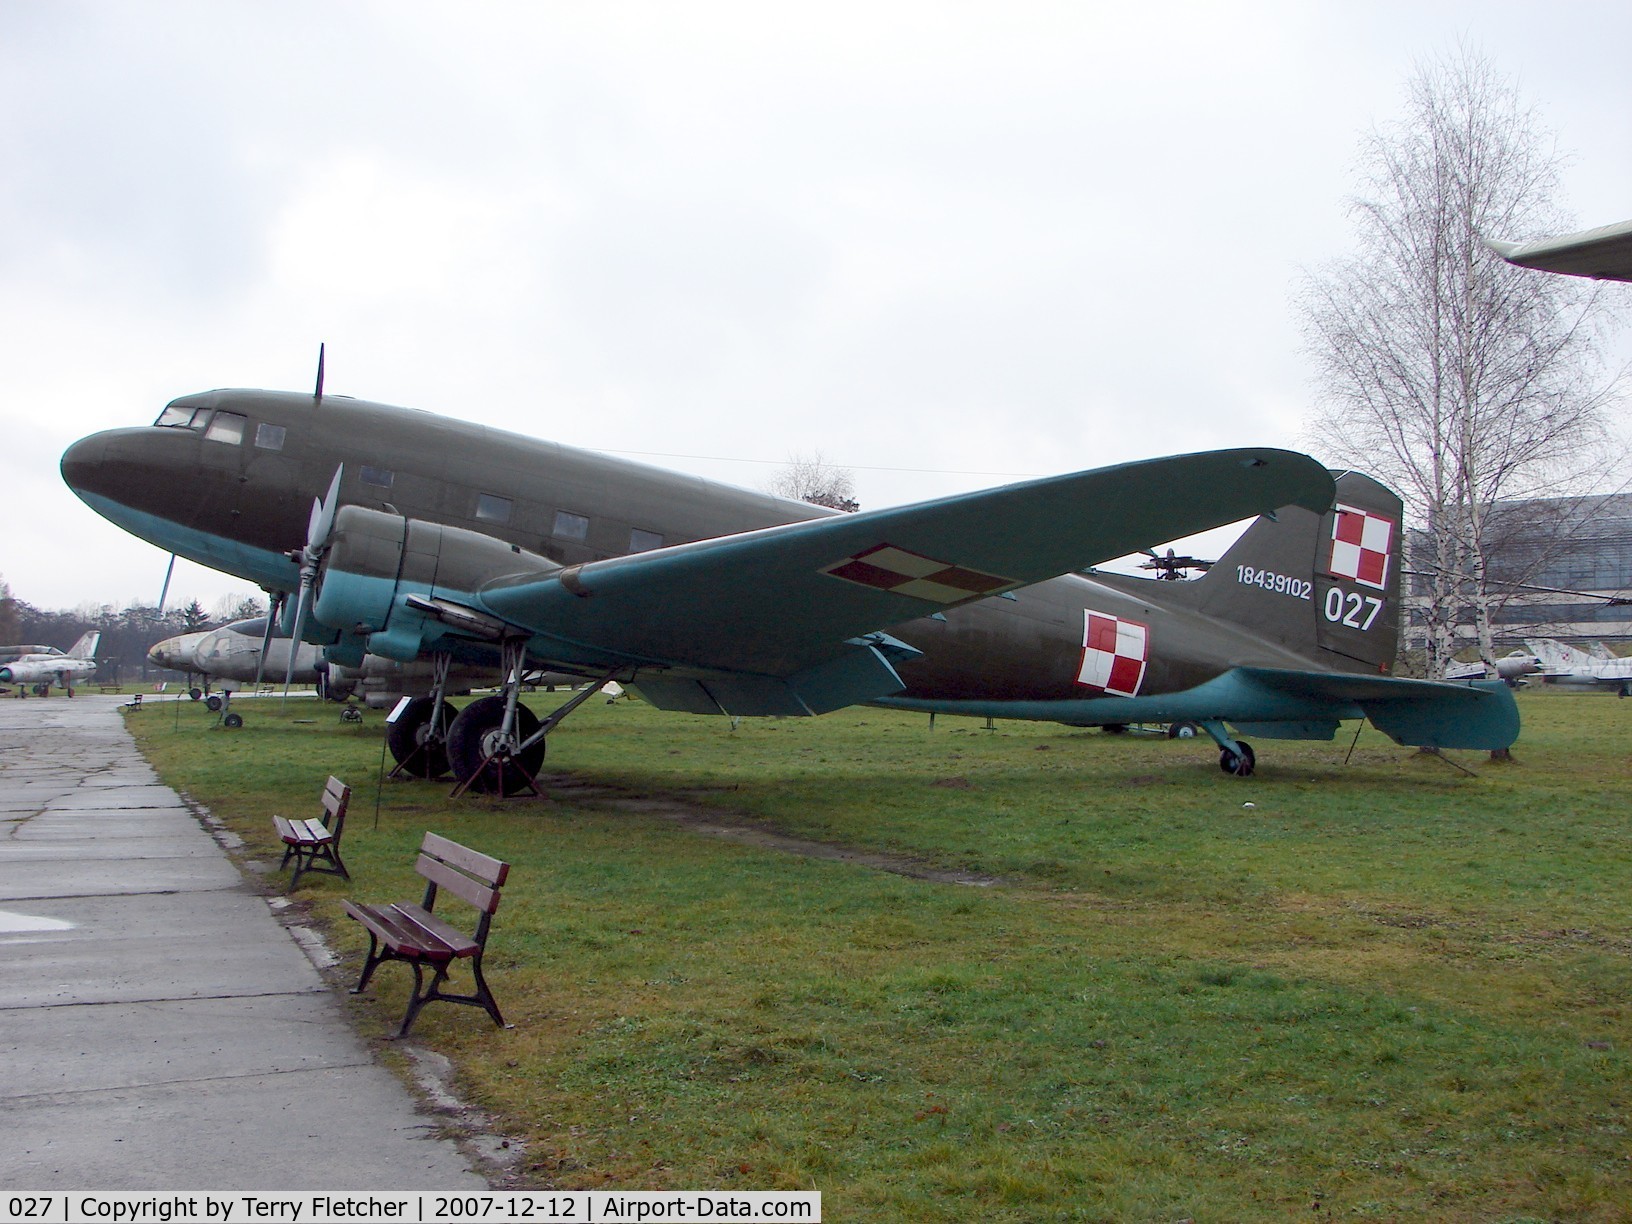 027, 1943 Lisunov Li-2T C/N 18439102, This Lisunov Li-2T c/n 18439102 is preserved at the Poland Aviation Museum in Krakow